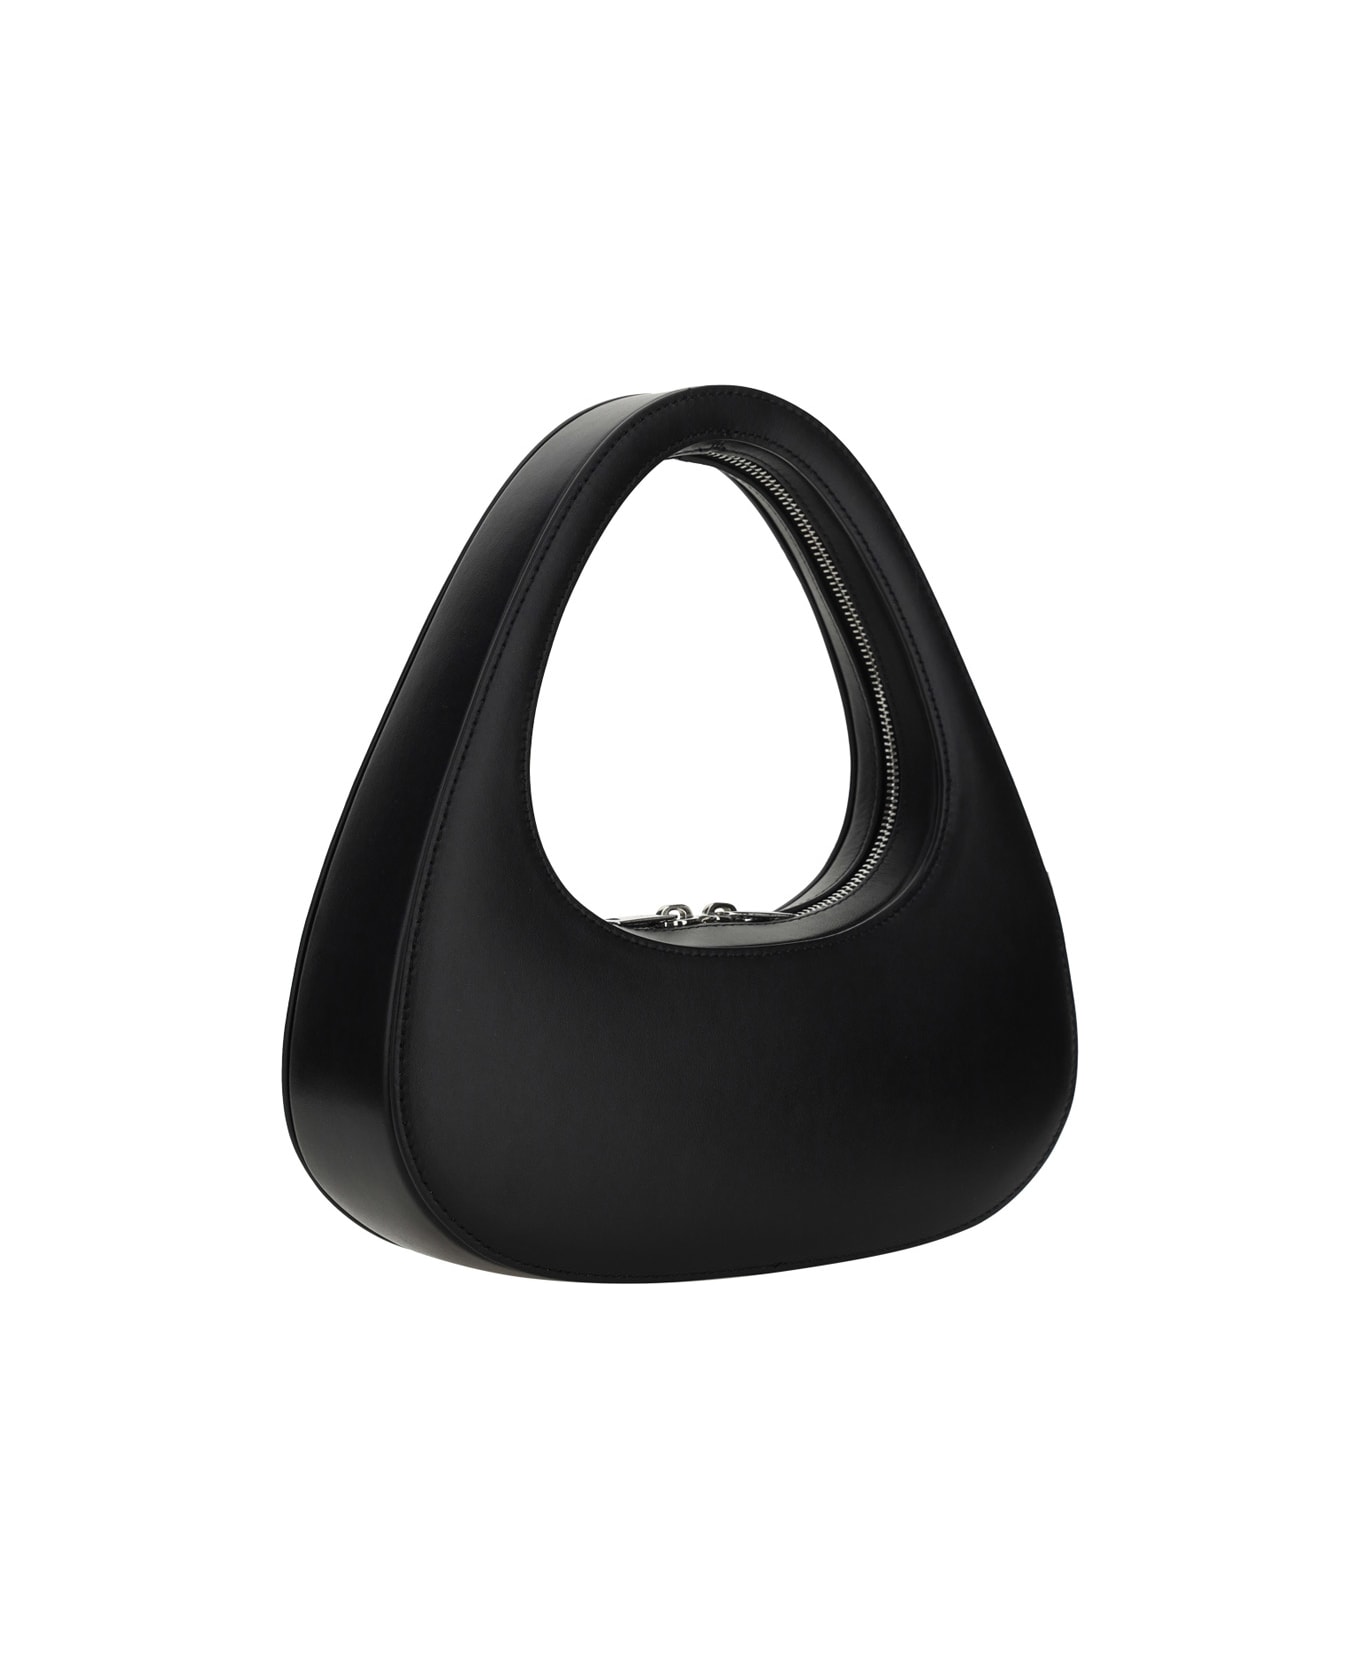 Coperni Baguette Swipe Shoulder Bag - Black